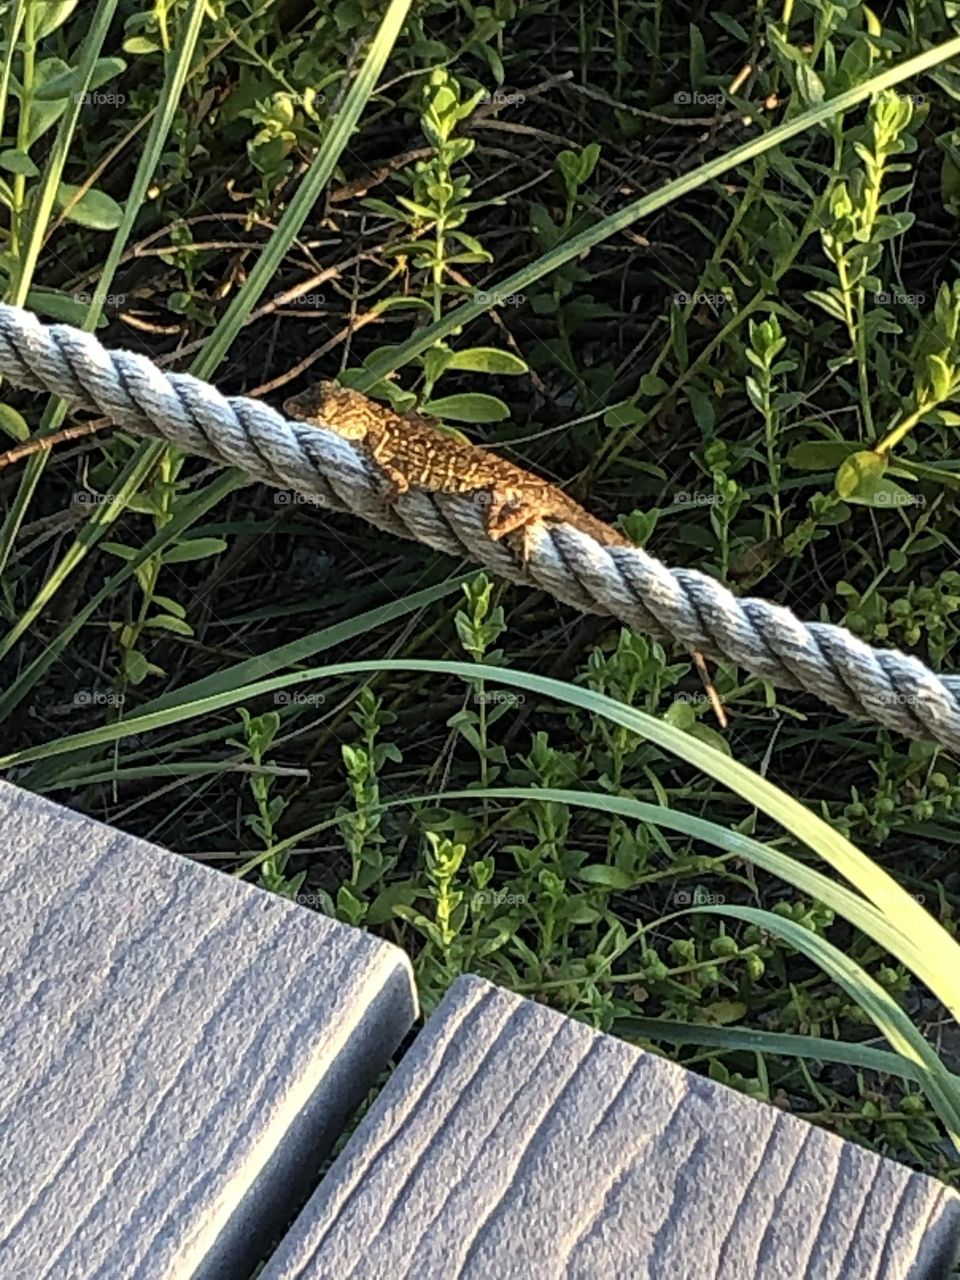 Lizard sunning on rope